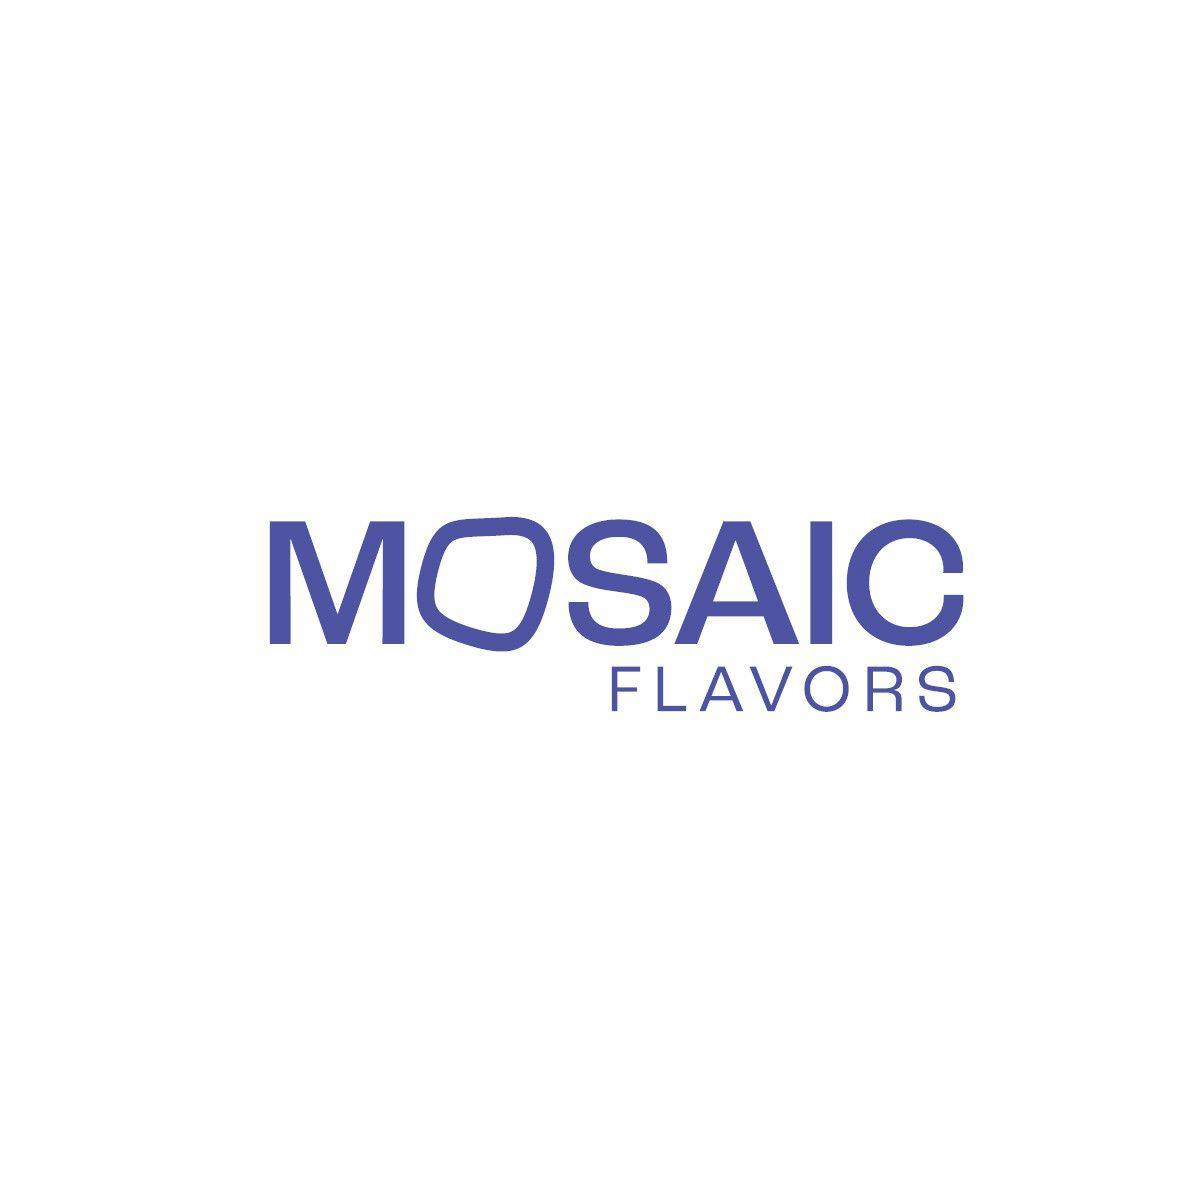 Flavor companies OC Flavors and Novotaste rebrand as Mosaic Flavors